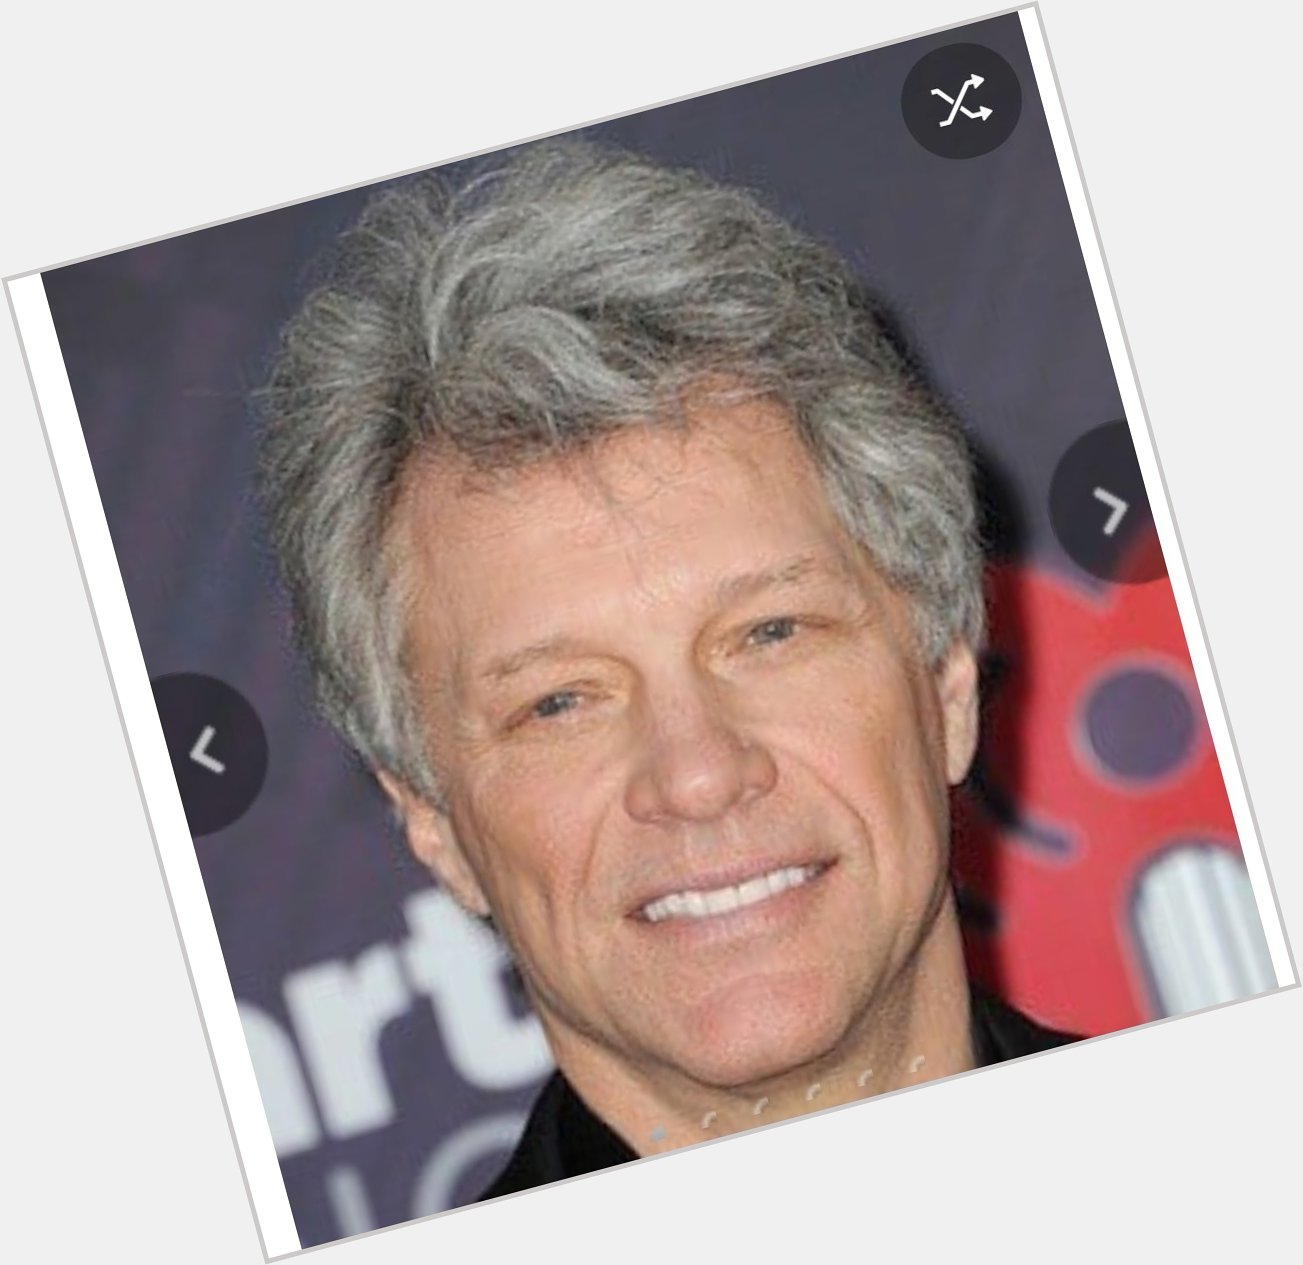 Happy birthday to a great rock artist. Happy Birthday to Jon Bon Jovi 